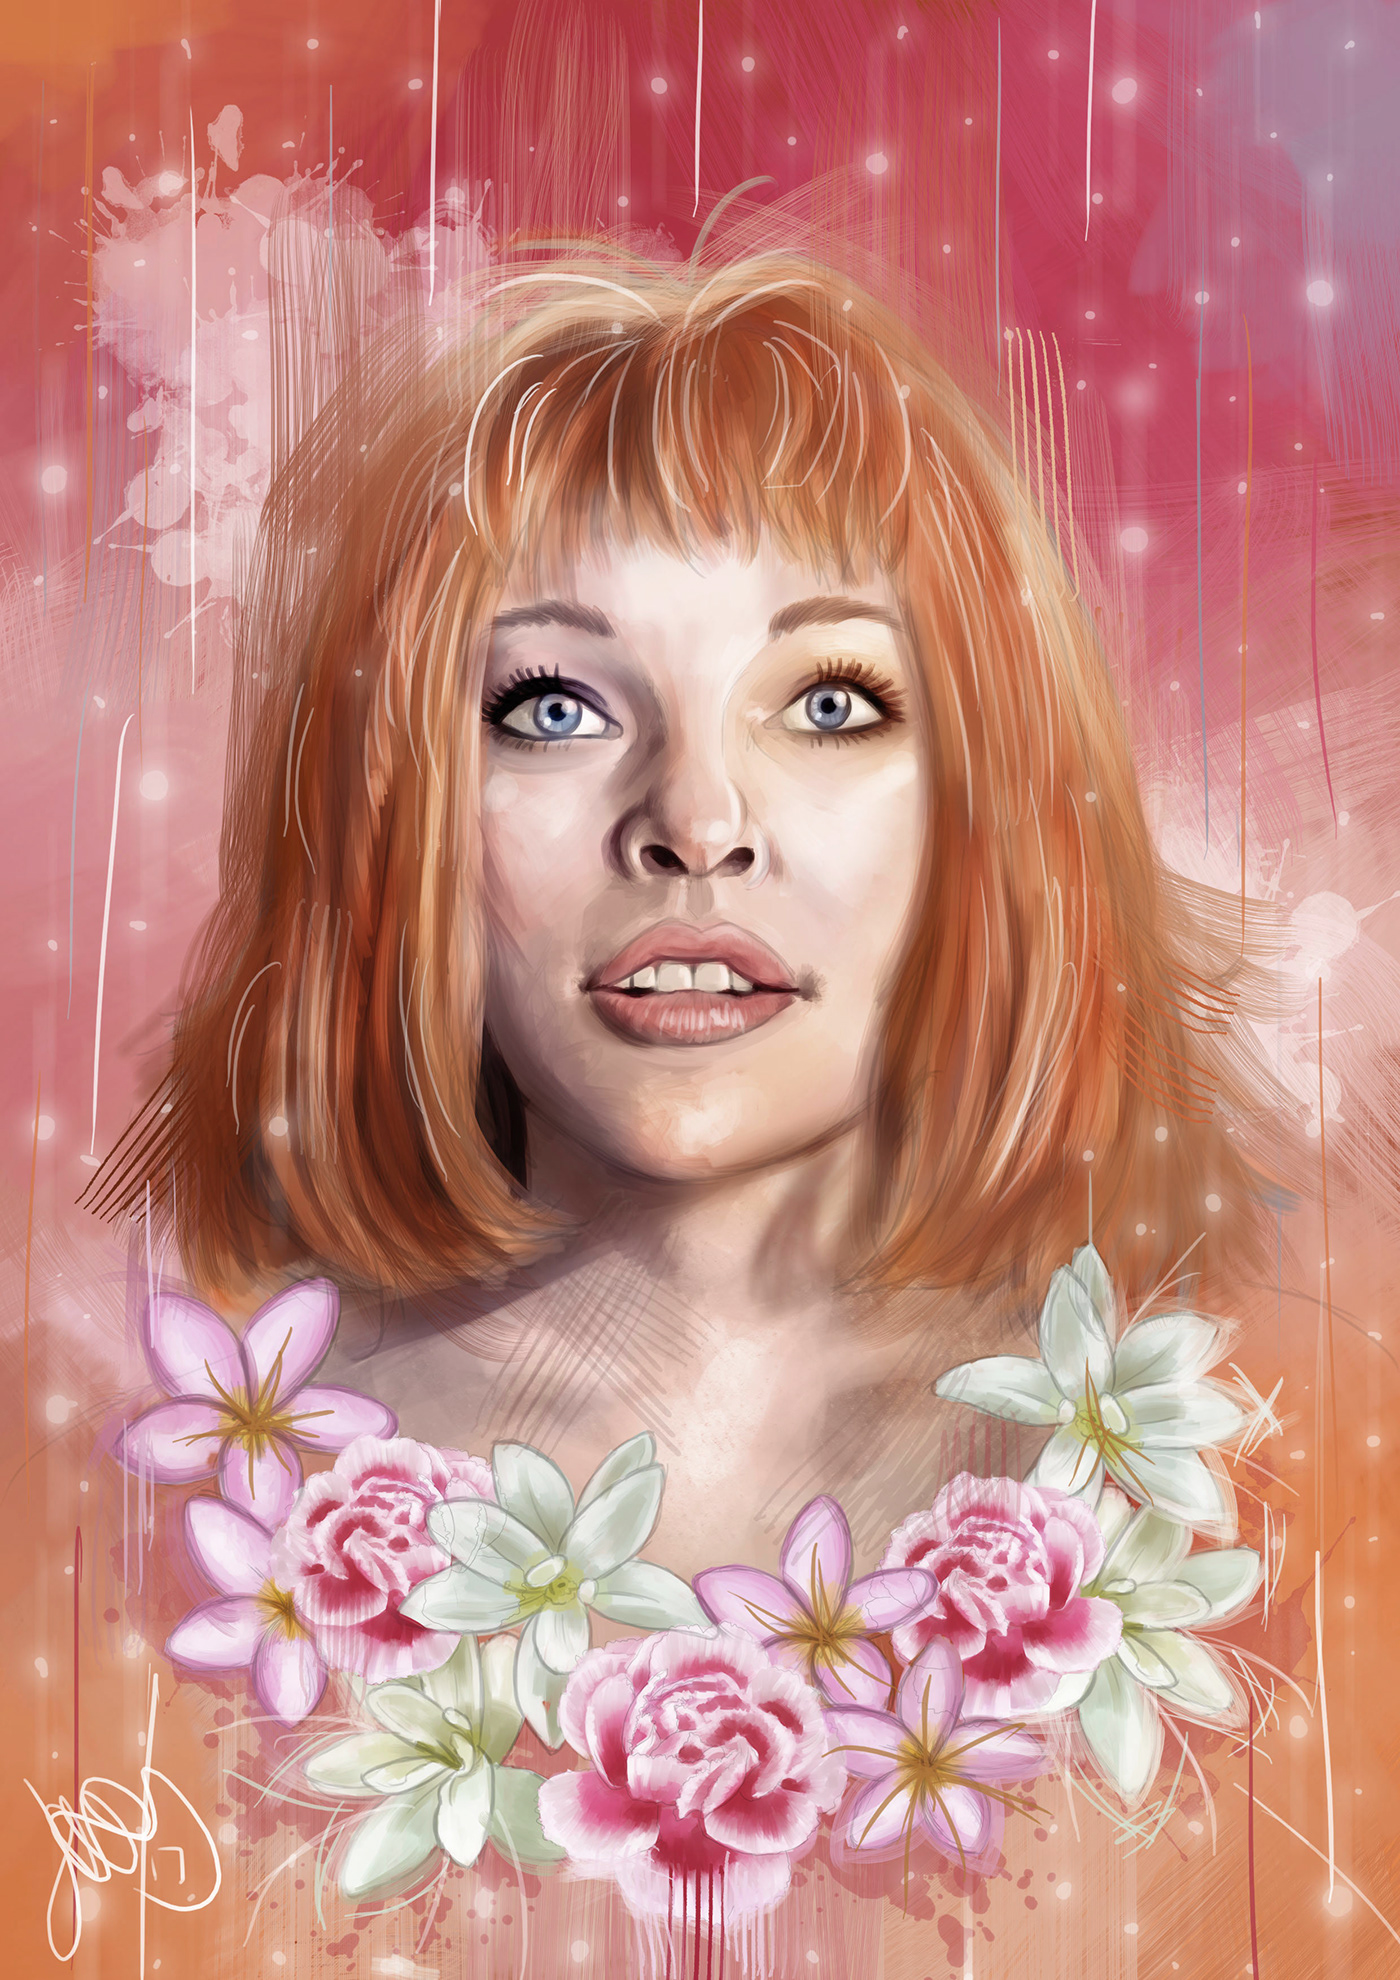 leeloo leeloo dallas dallas the fifth element mila jovovich Mila Jovovich Multipass portrait Flowers